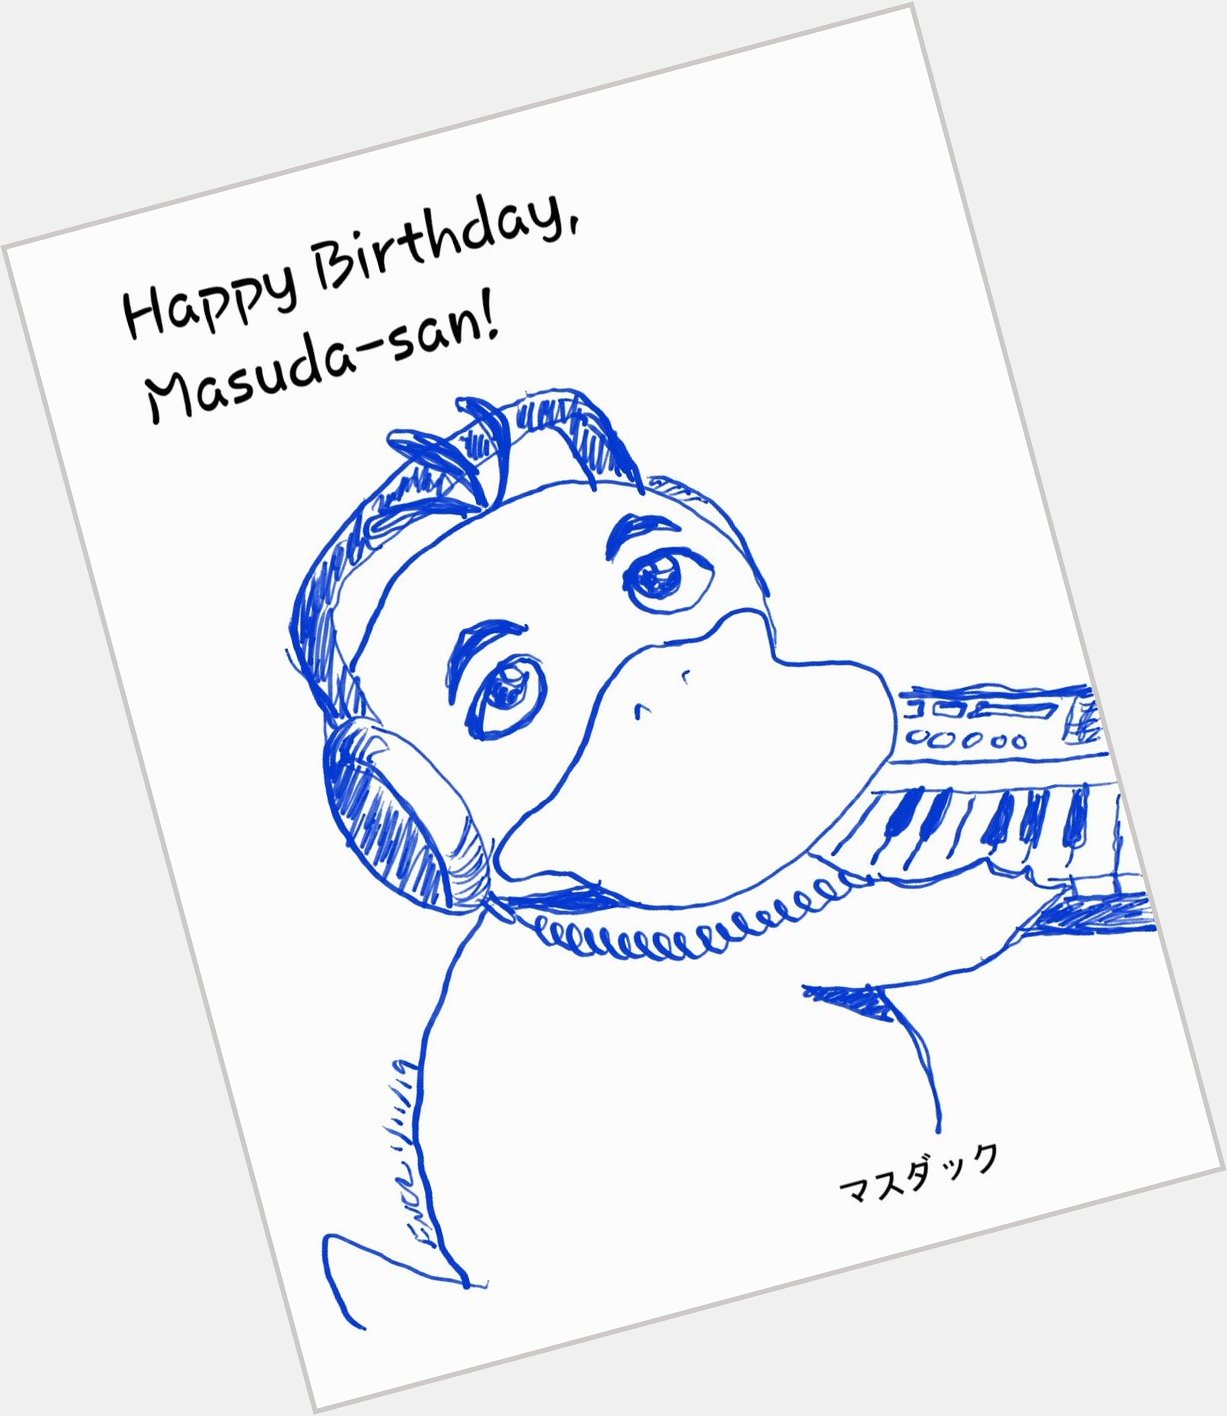  Happy Birthday, Masuda-san!              !  